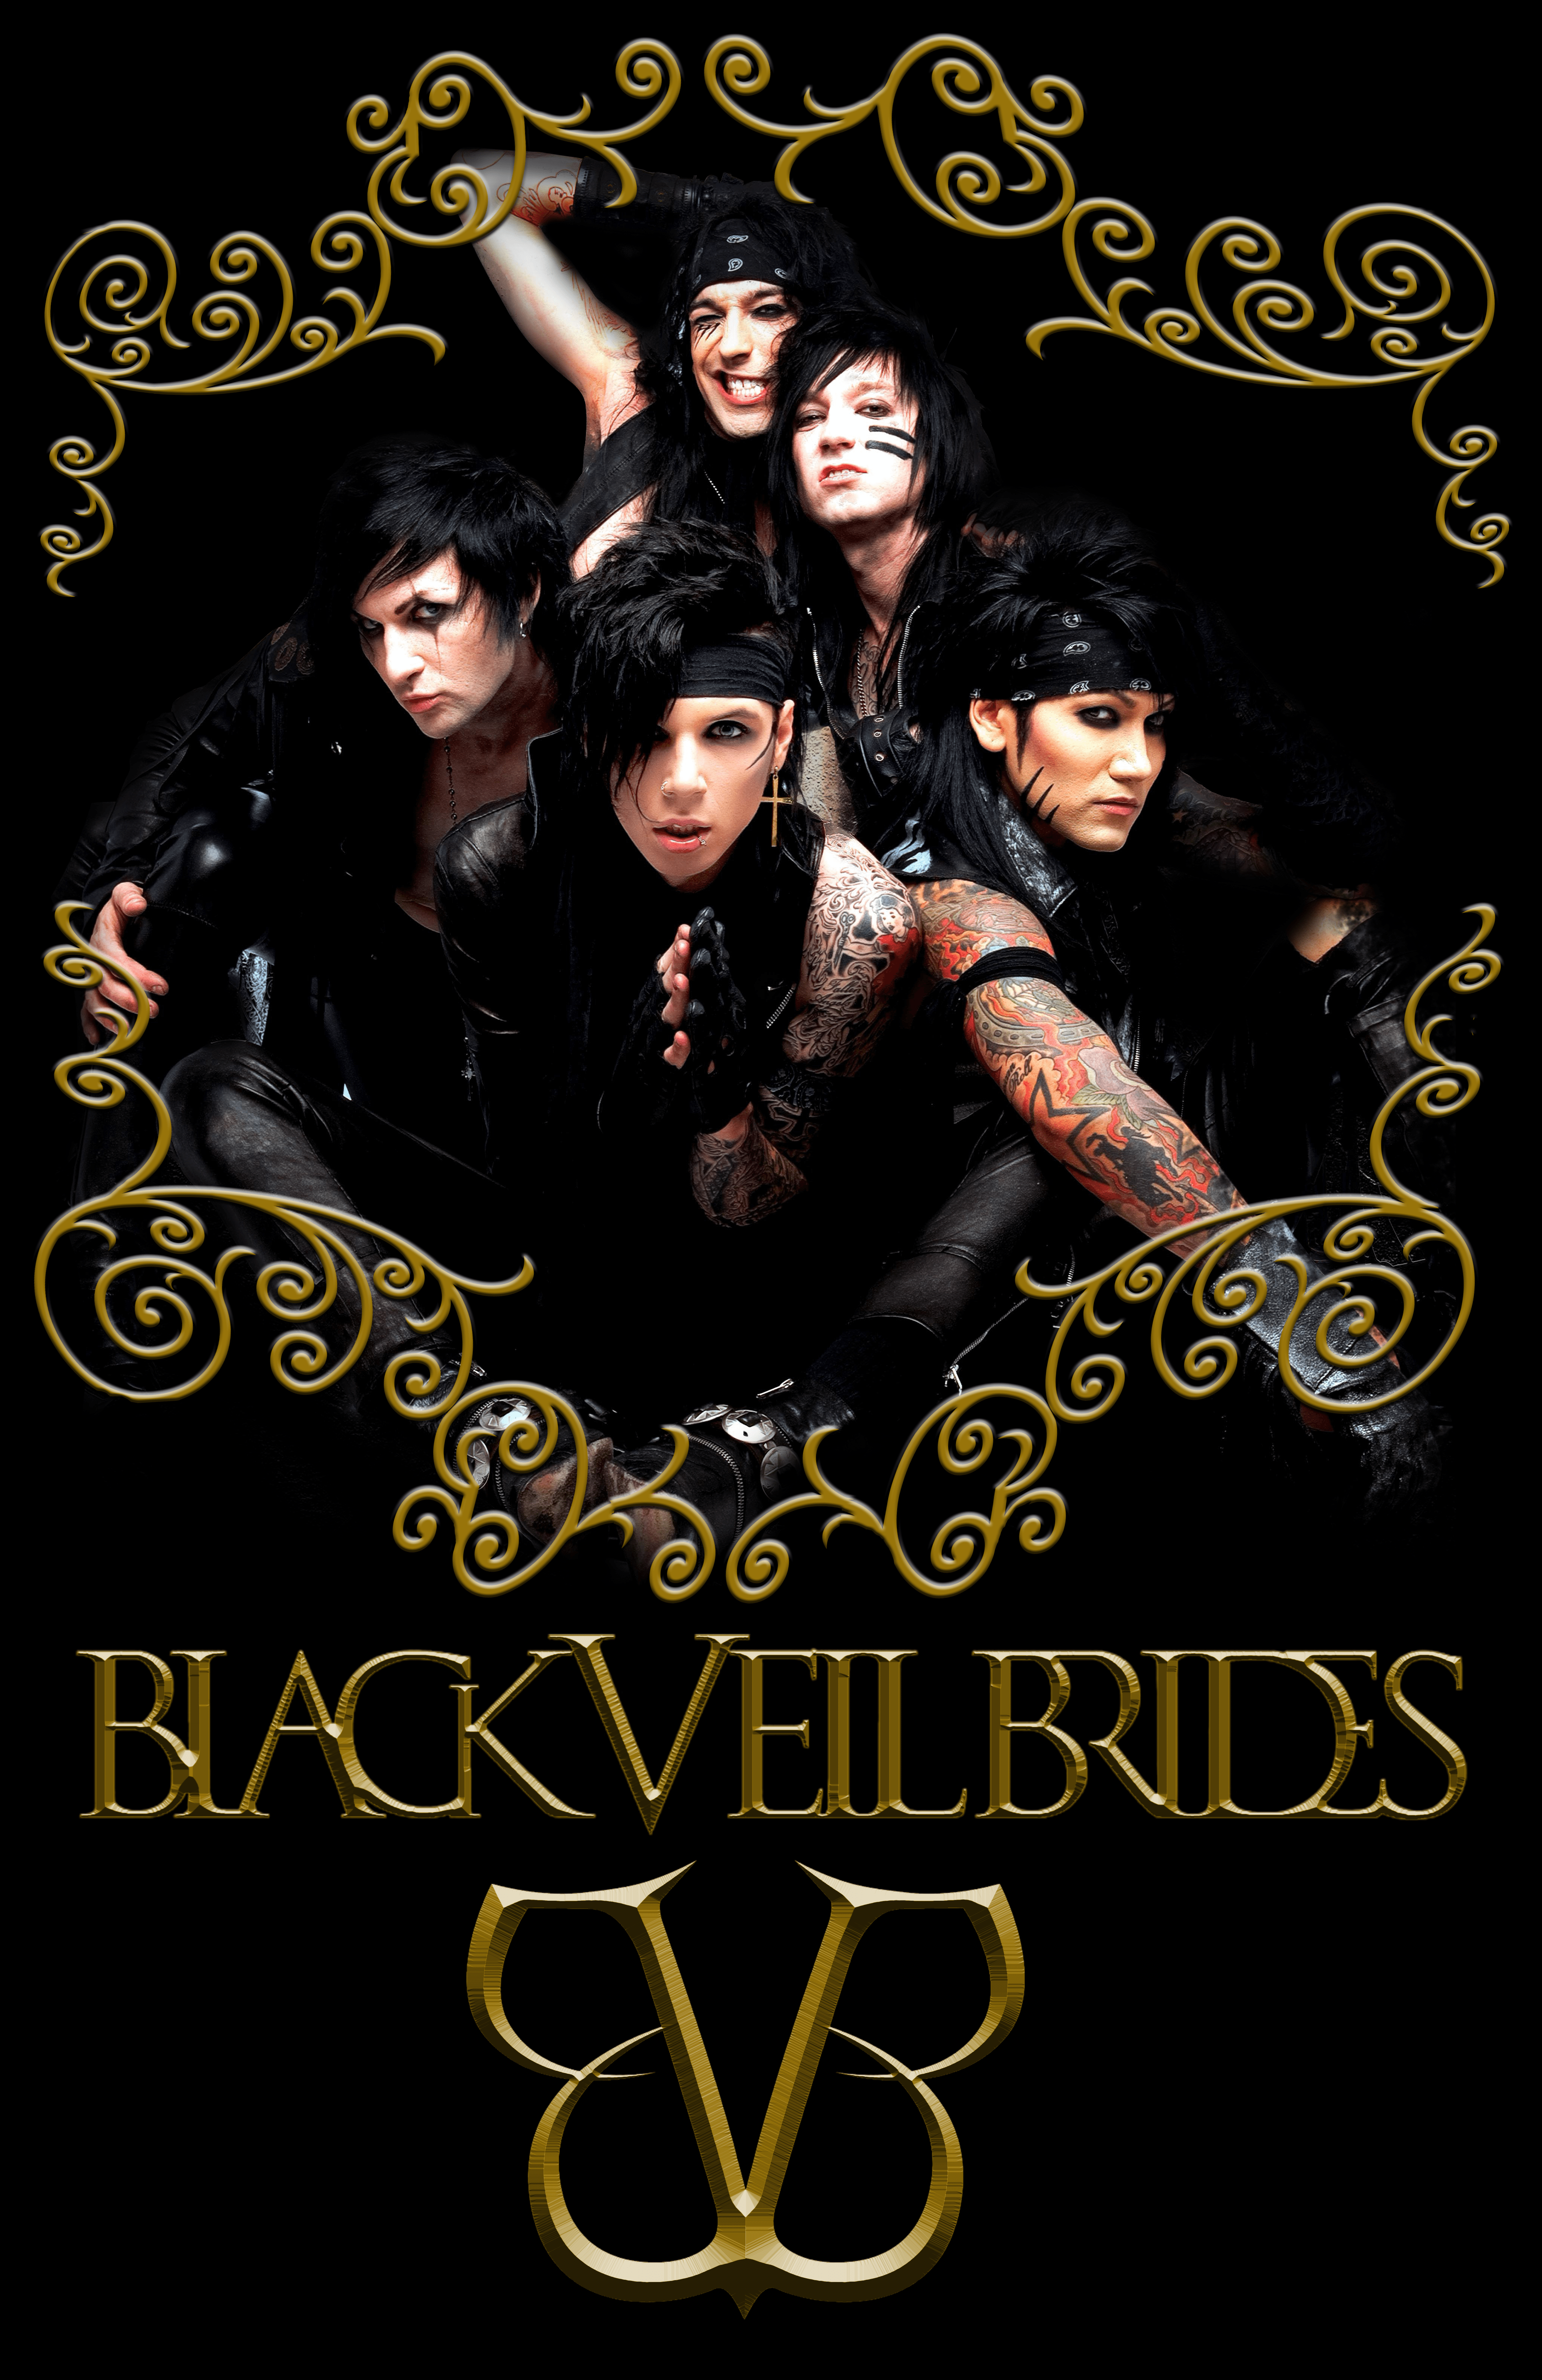 Black Veil Brides Wallpaper Background HD Pics For Mobile Phones